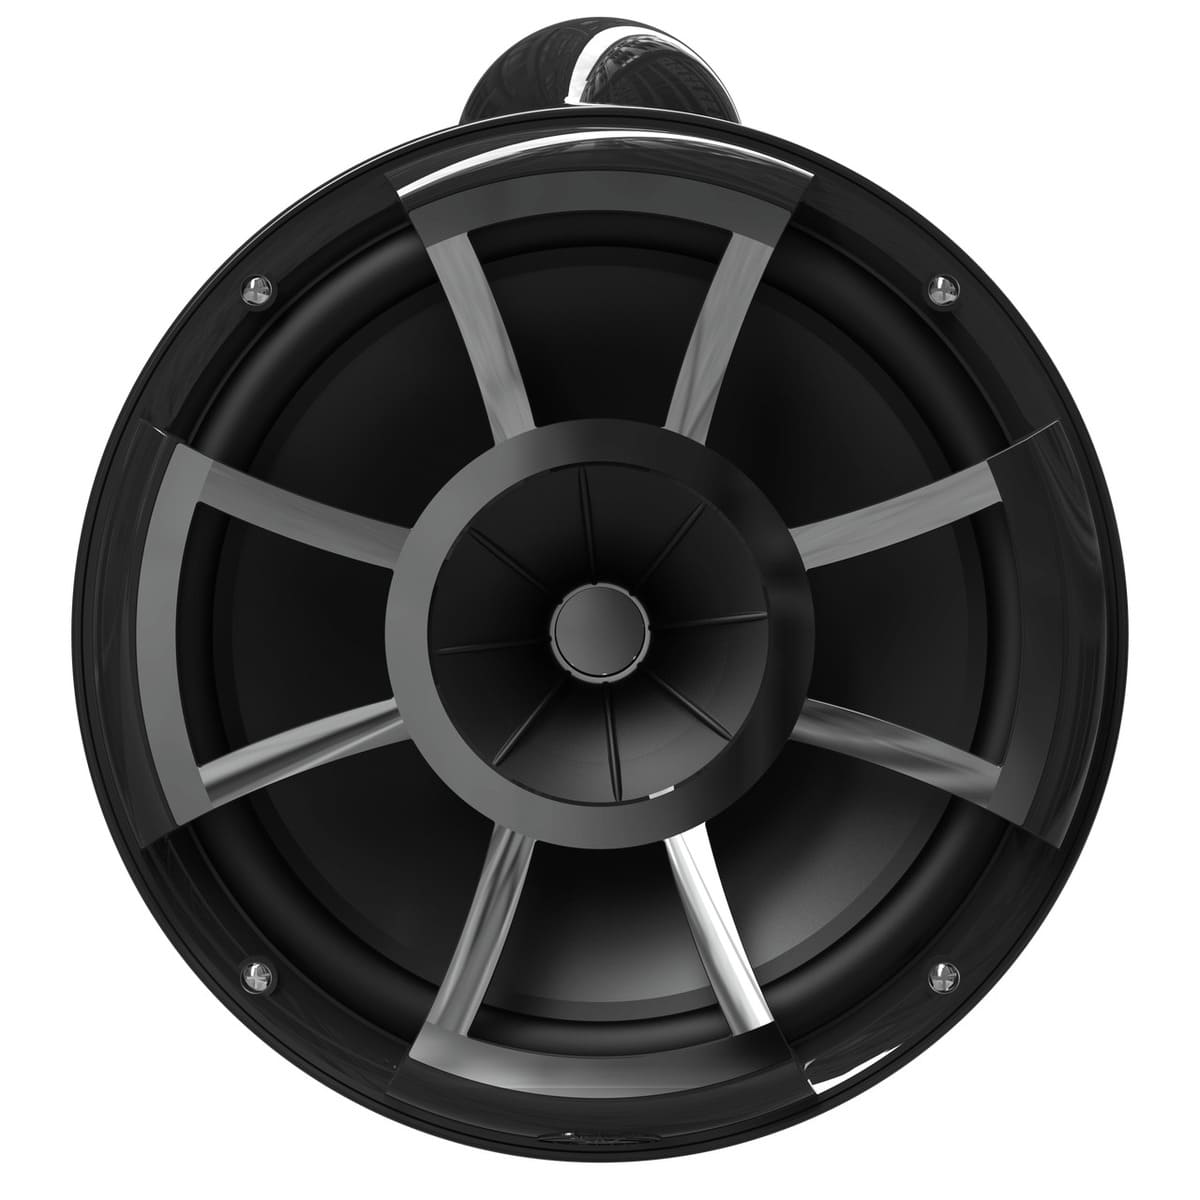 Wet Sounds Revolution Series 10" Black Tower Speakers